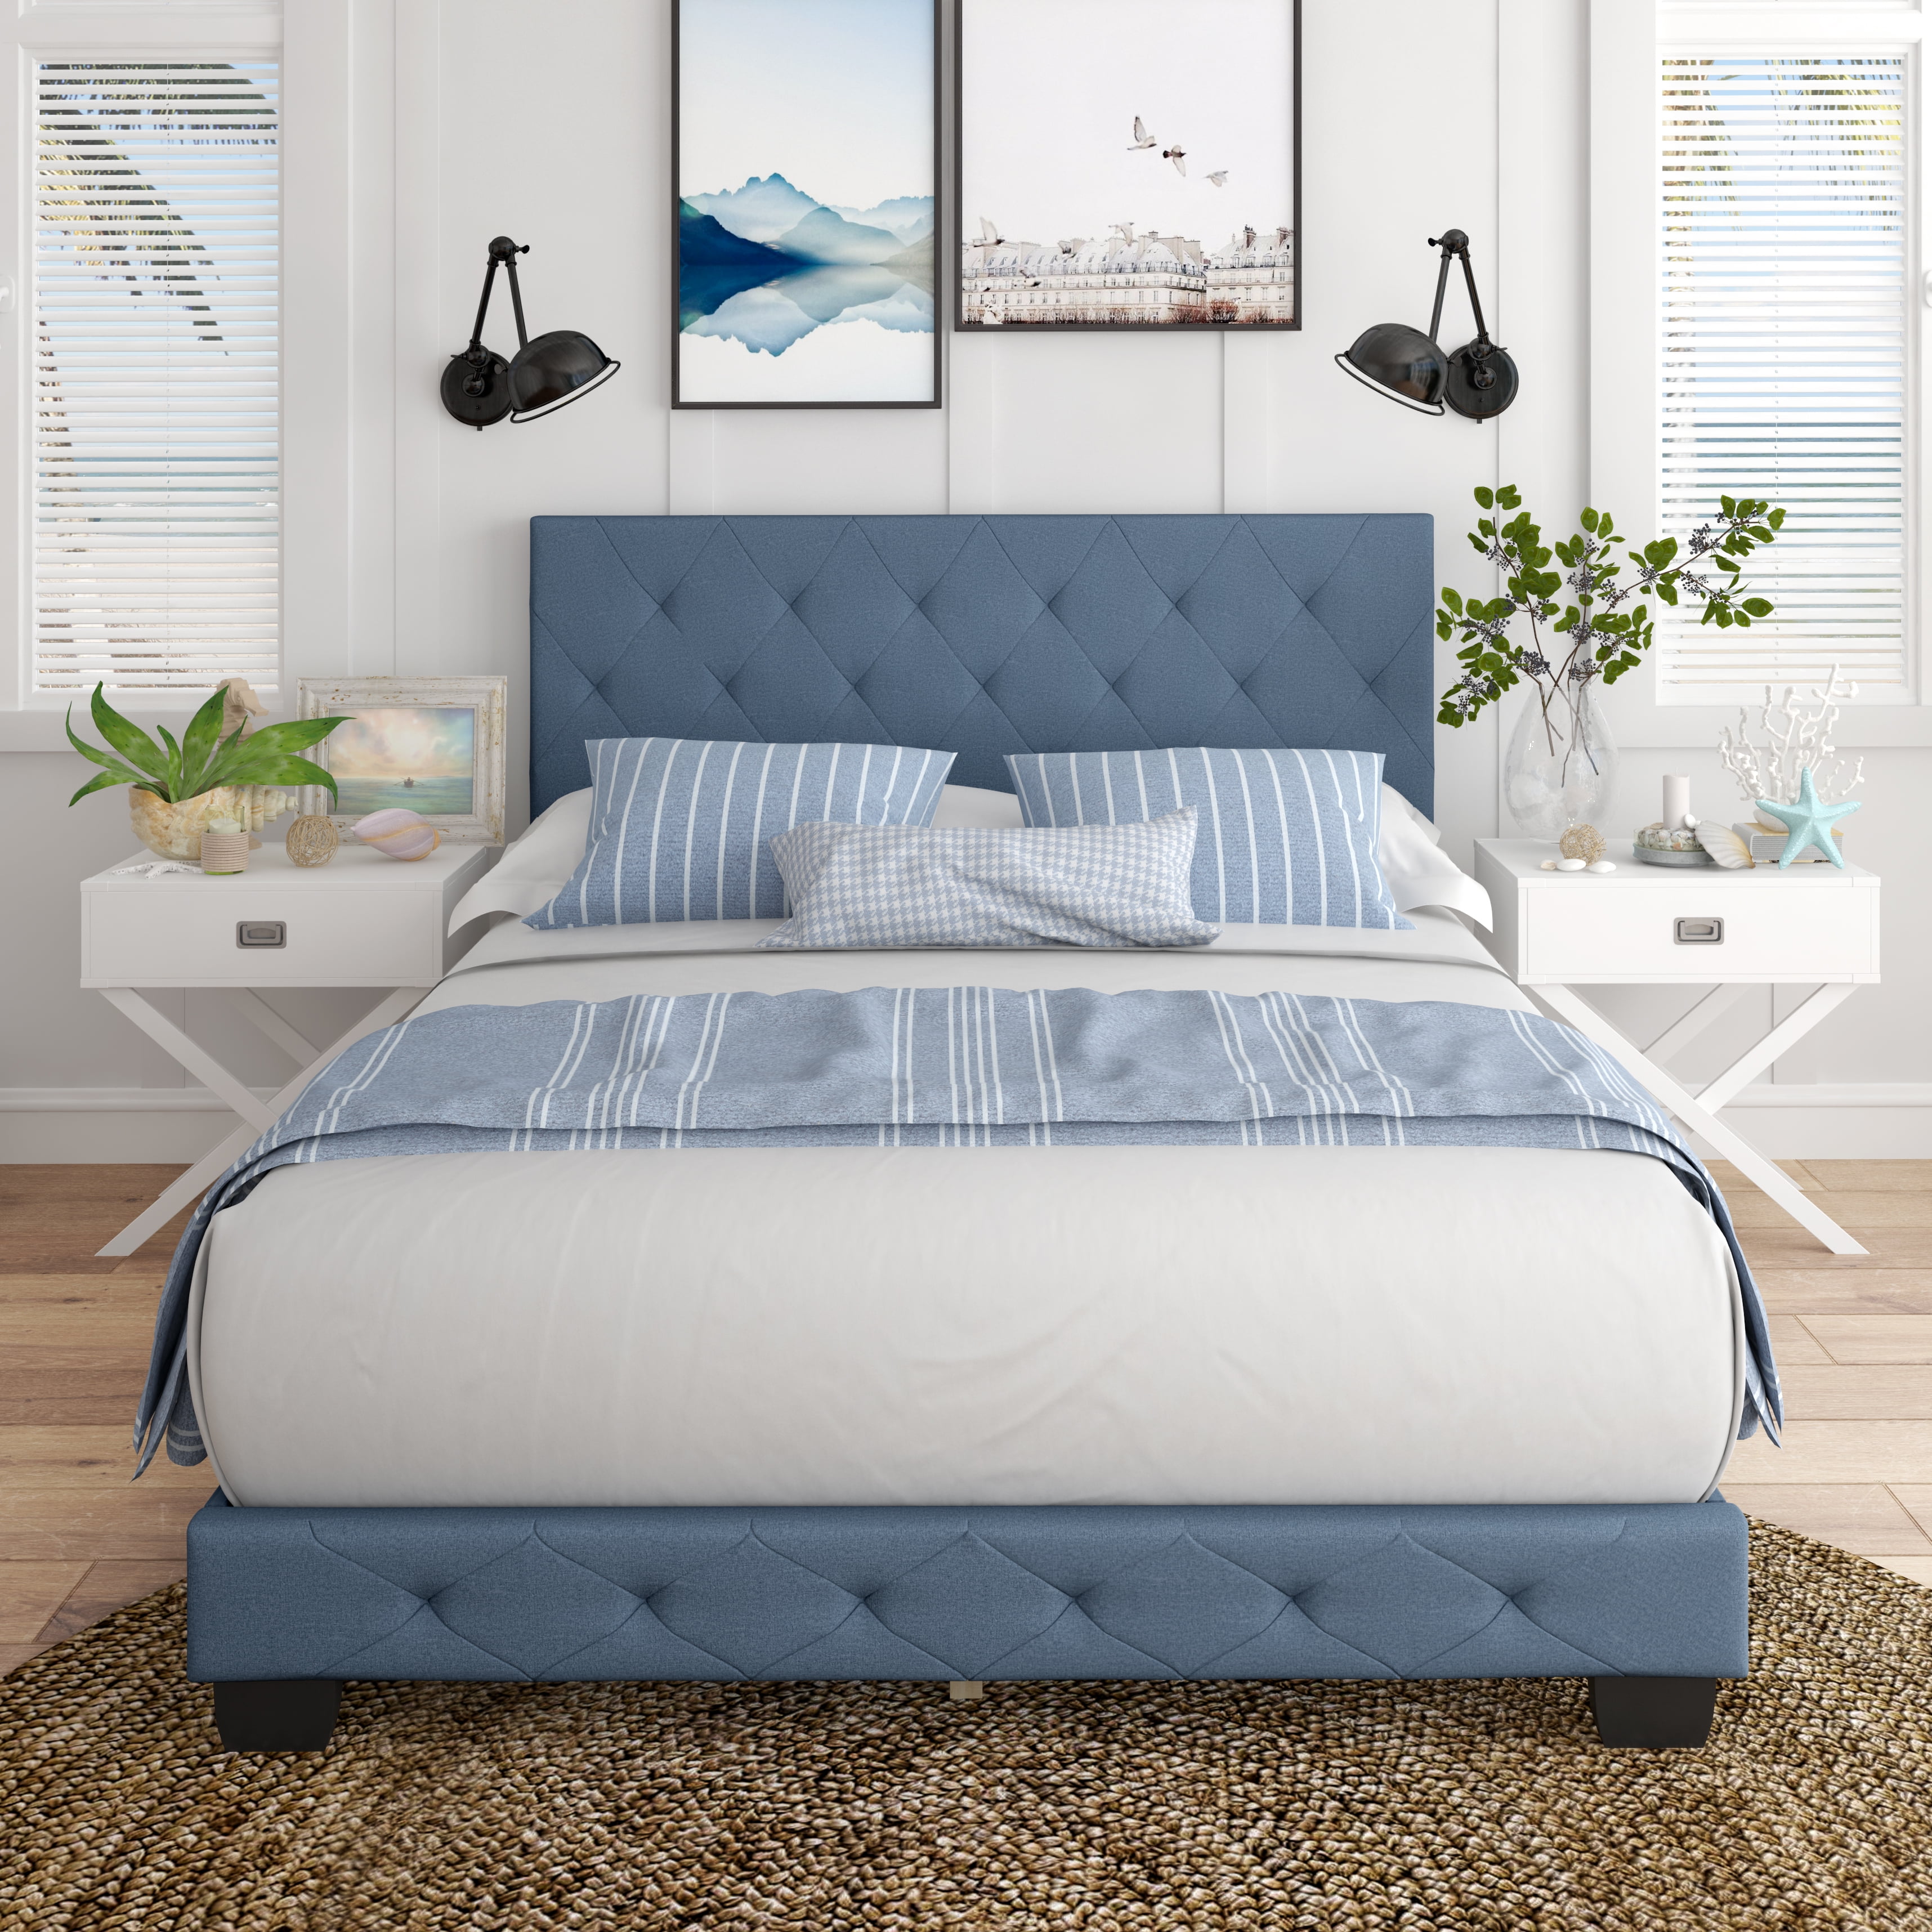 Boyd Sleep Chloe Linen Upholstered Platform Bed Frame, Blue, Queen